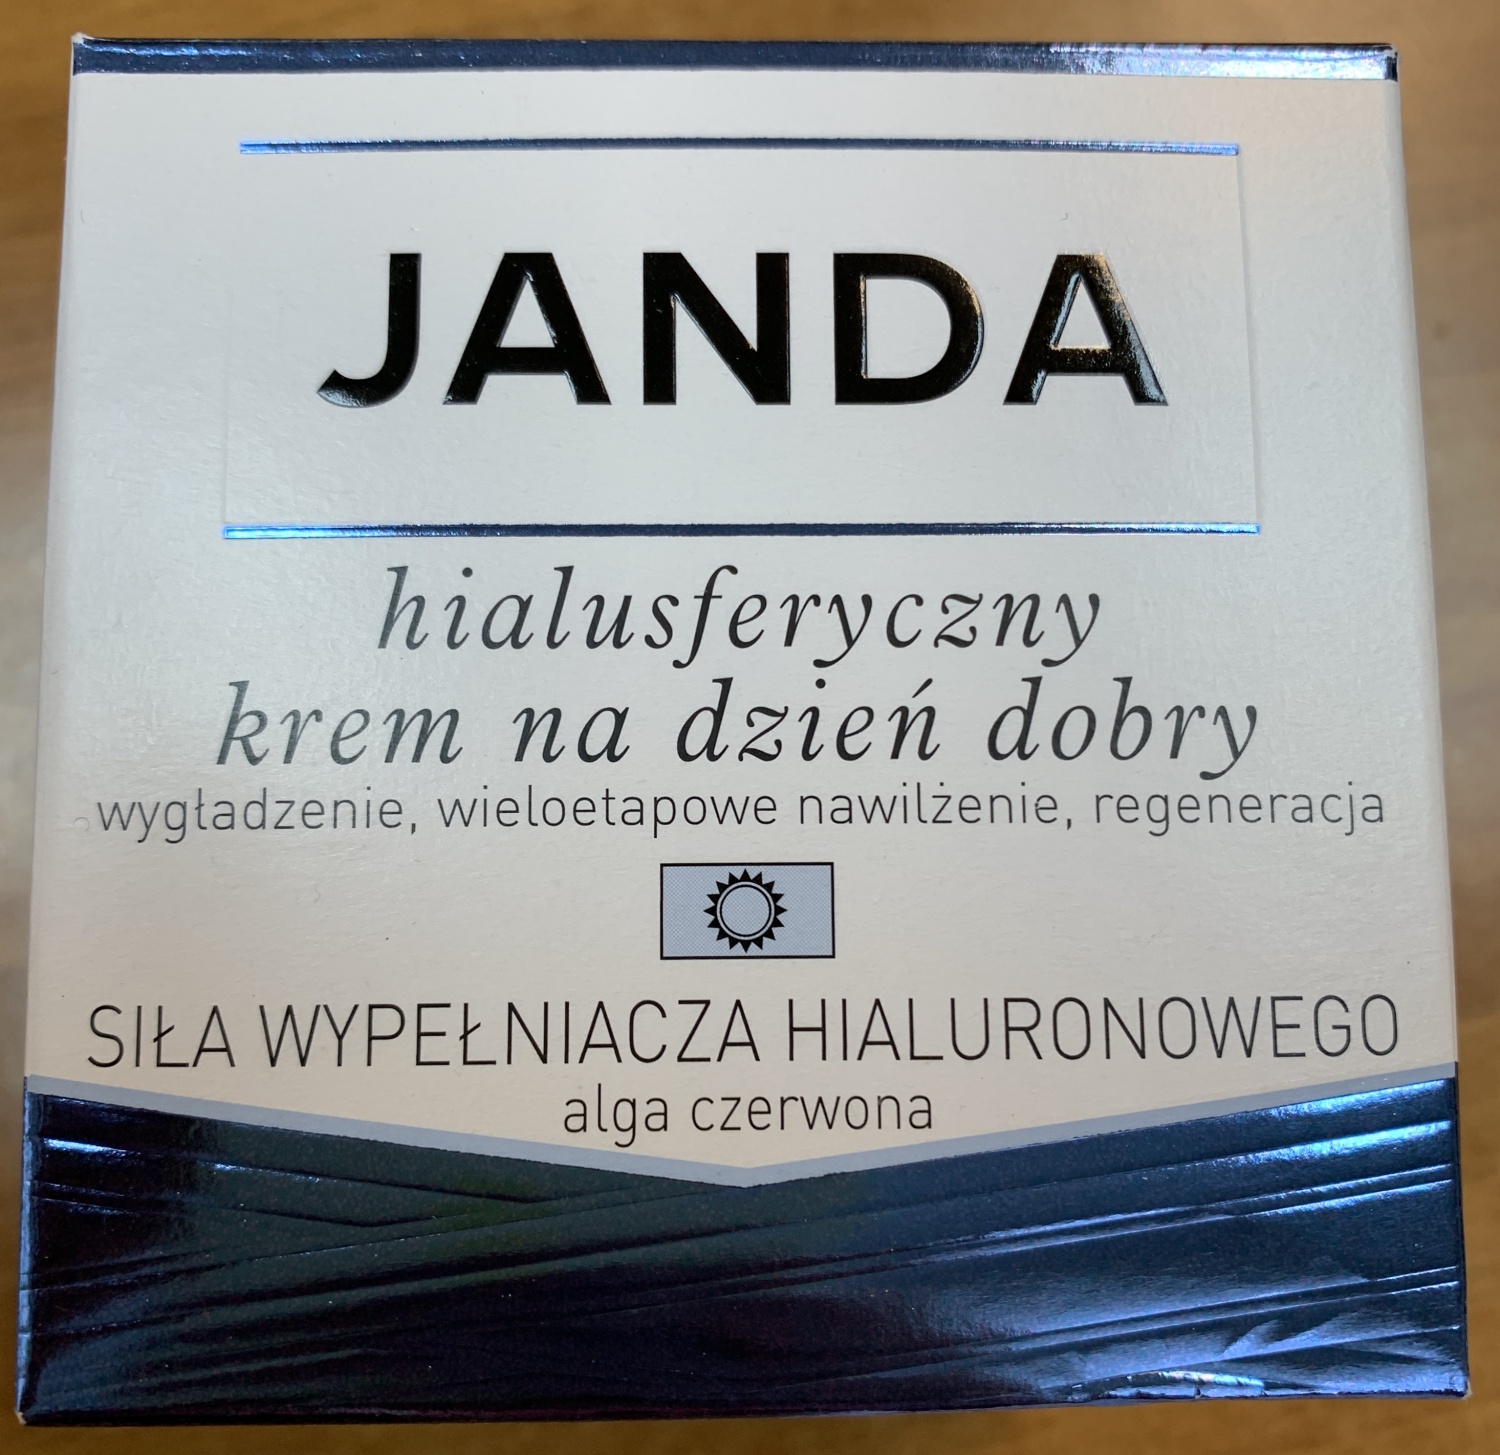 Janda